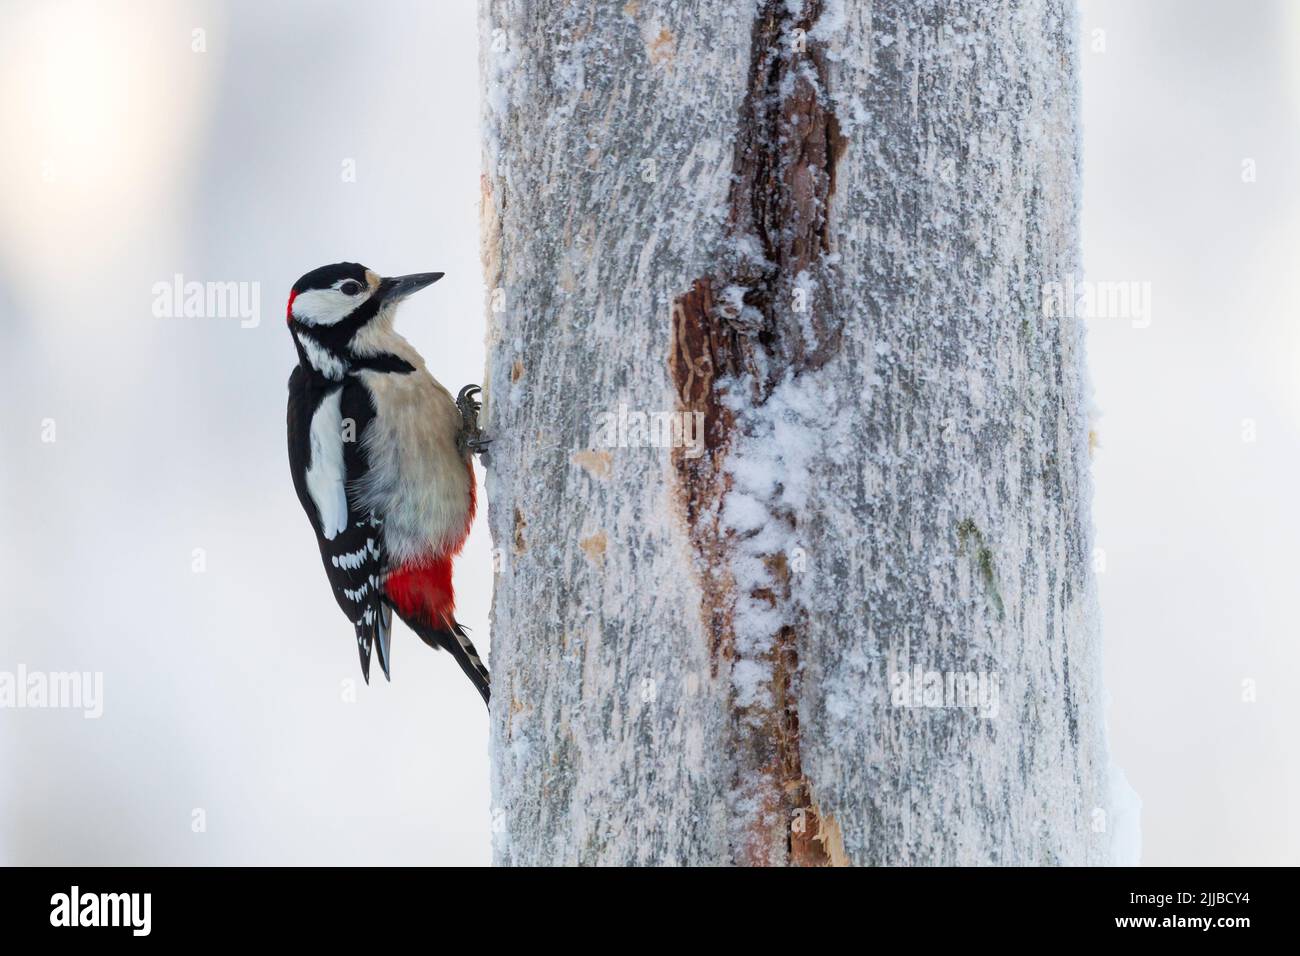 Great spotted woodpecker Dendrocopus major, adult male clinging to tree, Kuusamo, Finland, February Stock Photo